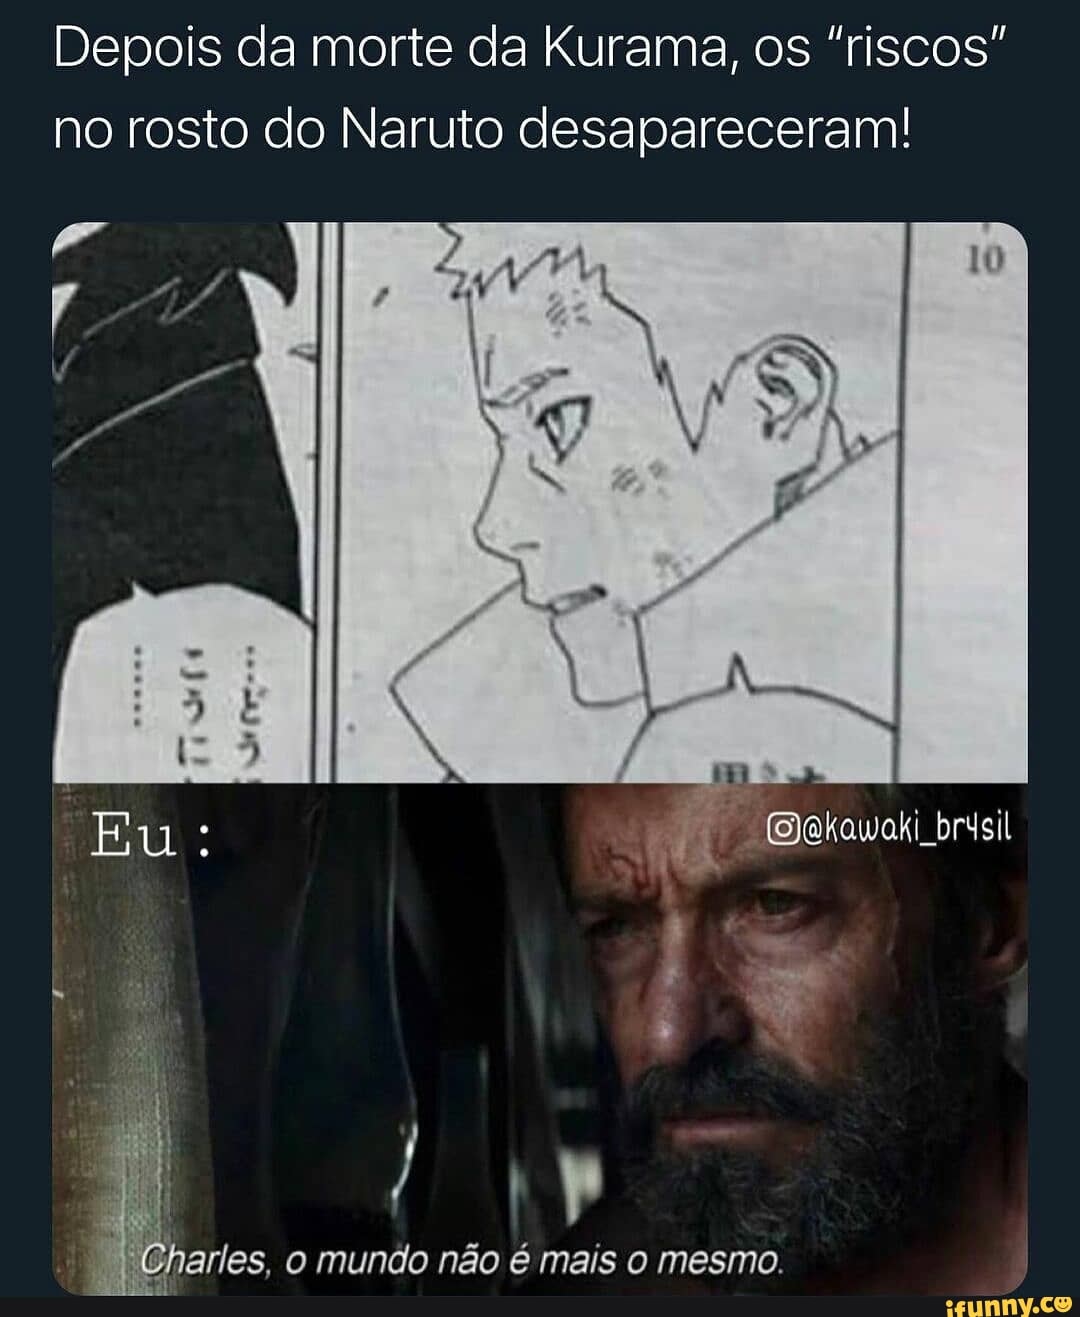 Boruto Brasil - A Kurama morreu e os risquinhos no rosto do Naruto